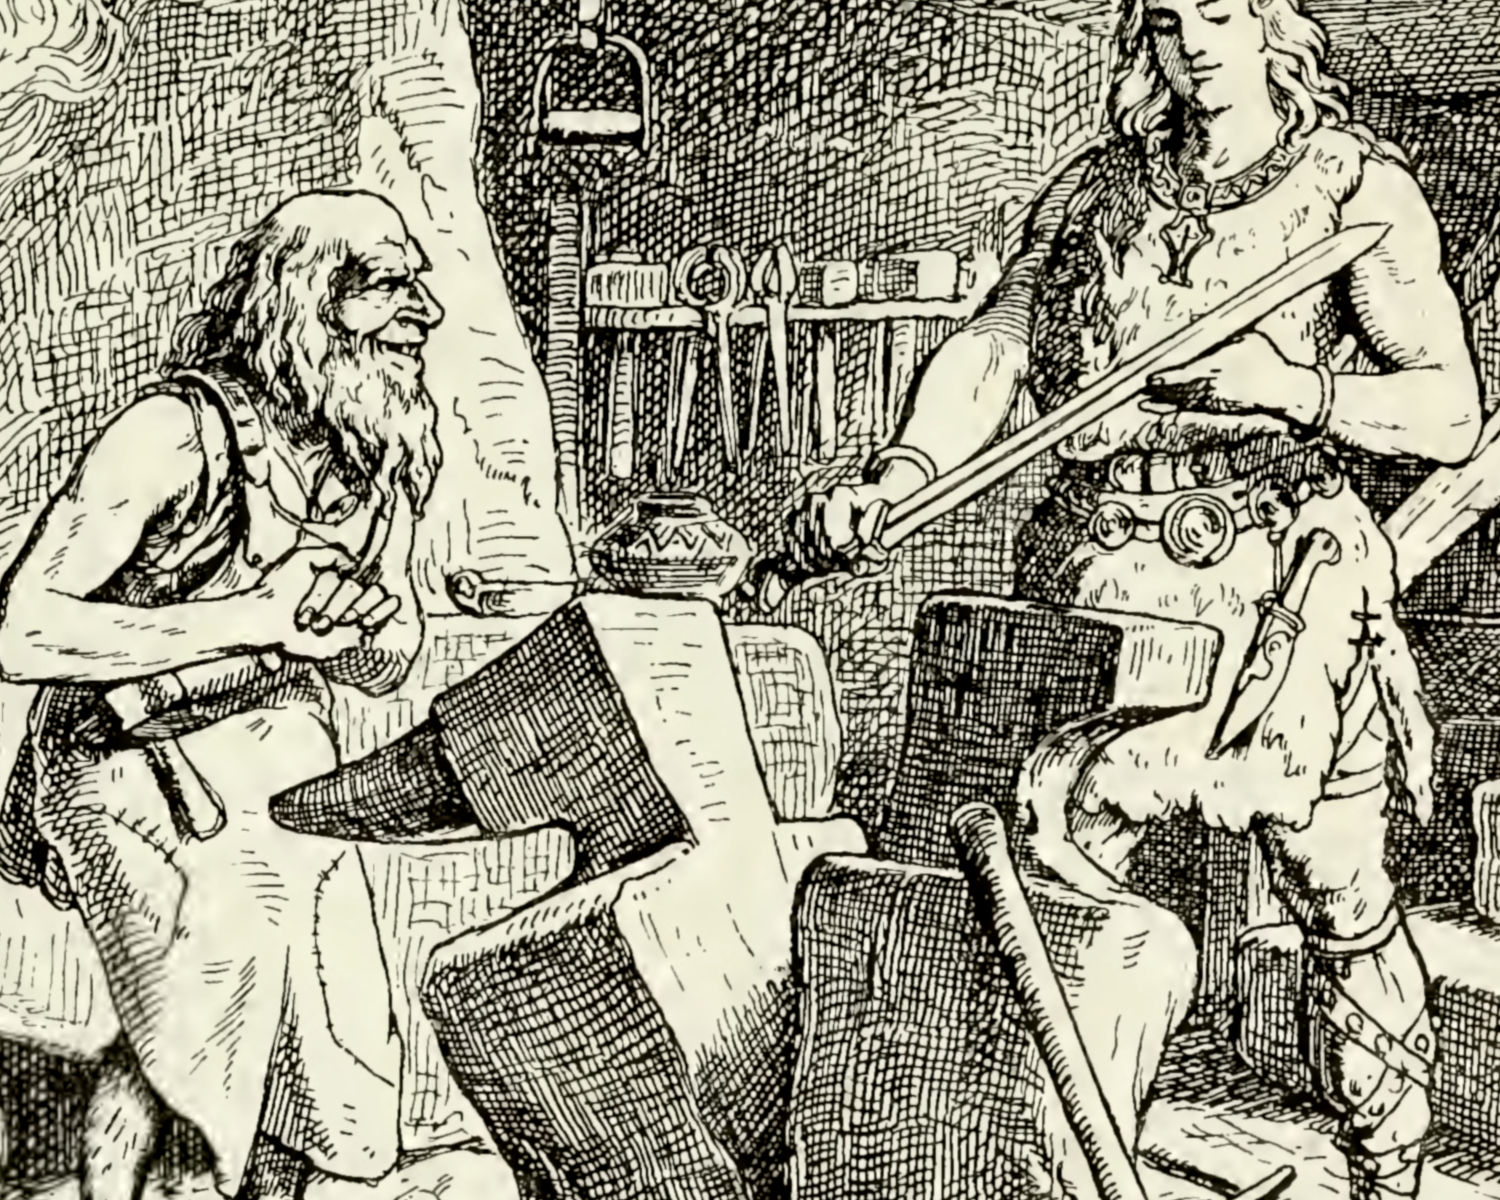 Sigurður testing the sword while Reginn waits for the verdict.